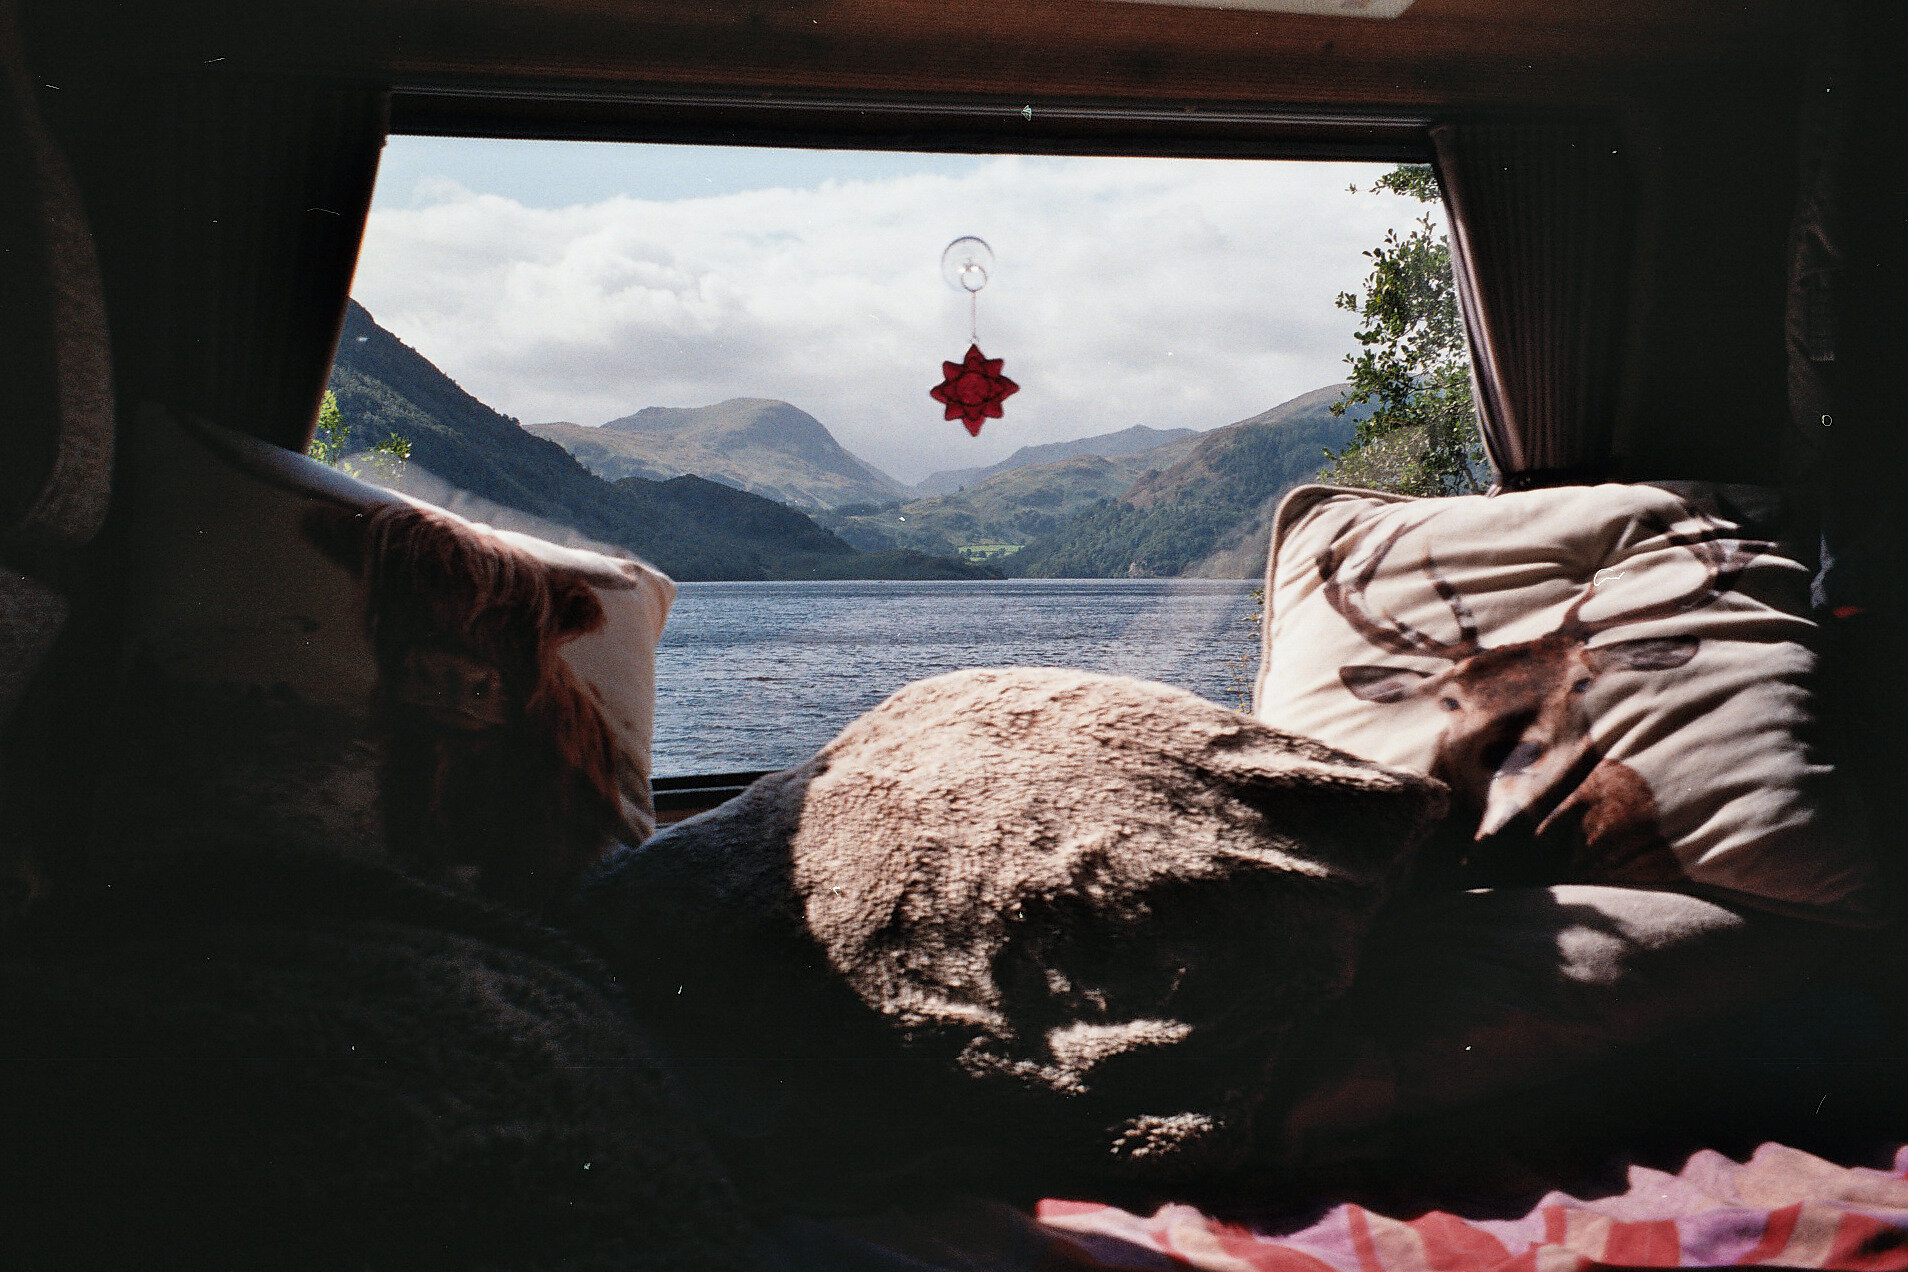 Van Life in The Lake District